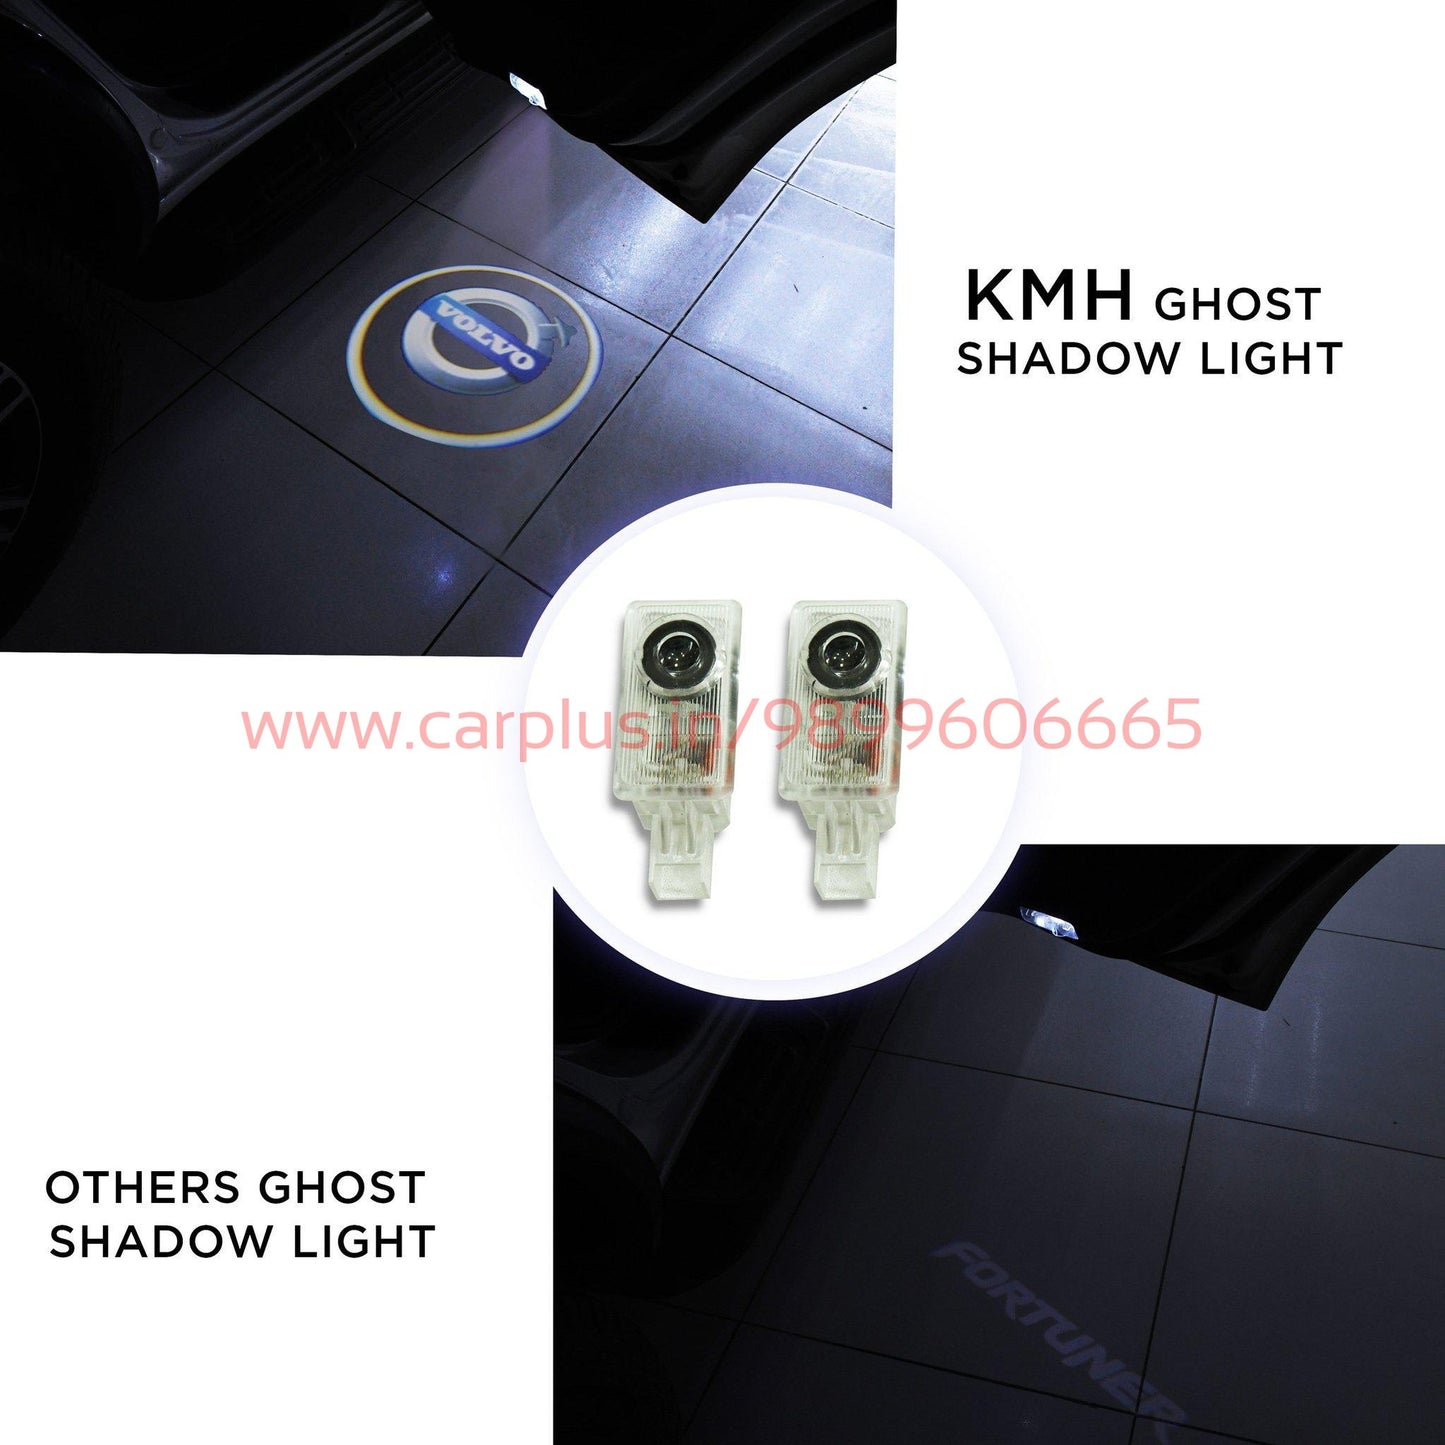 
                  
                    KMH Plug & Play Ghost Shadow Light For Volvo (Set of 2pcs) KMH-GHOST SHADOW LIGHT GHOST SHADOW LIGHT.
                  
                